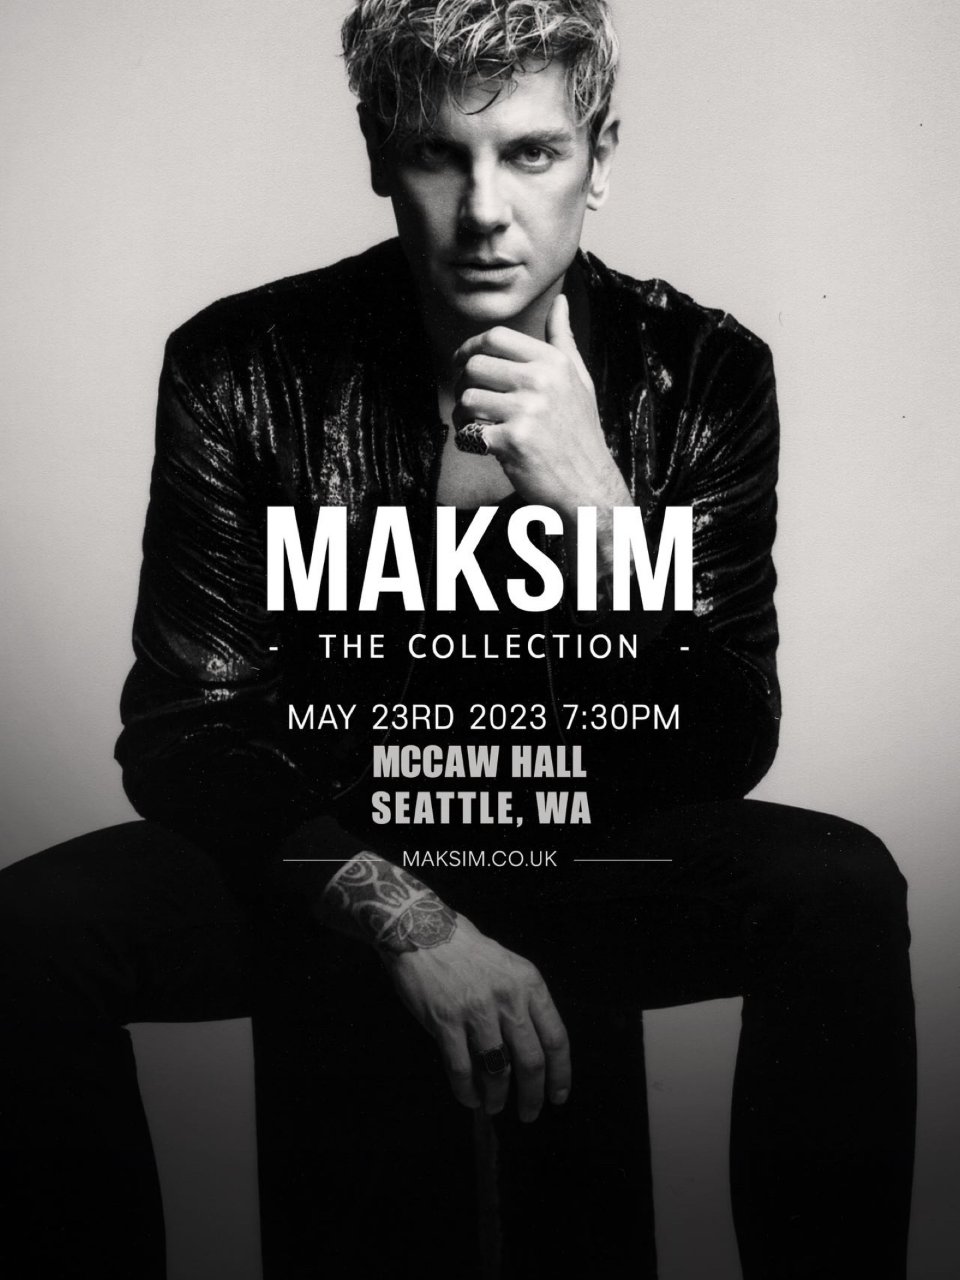 马克西姆西雅图演奏会 Maksim The Collection Us & Canada Tour 2023 Tickets May 23, 2023 Seattle, WA | Ticketmaster